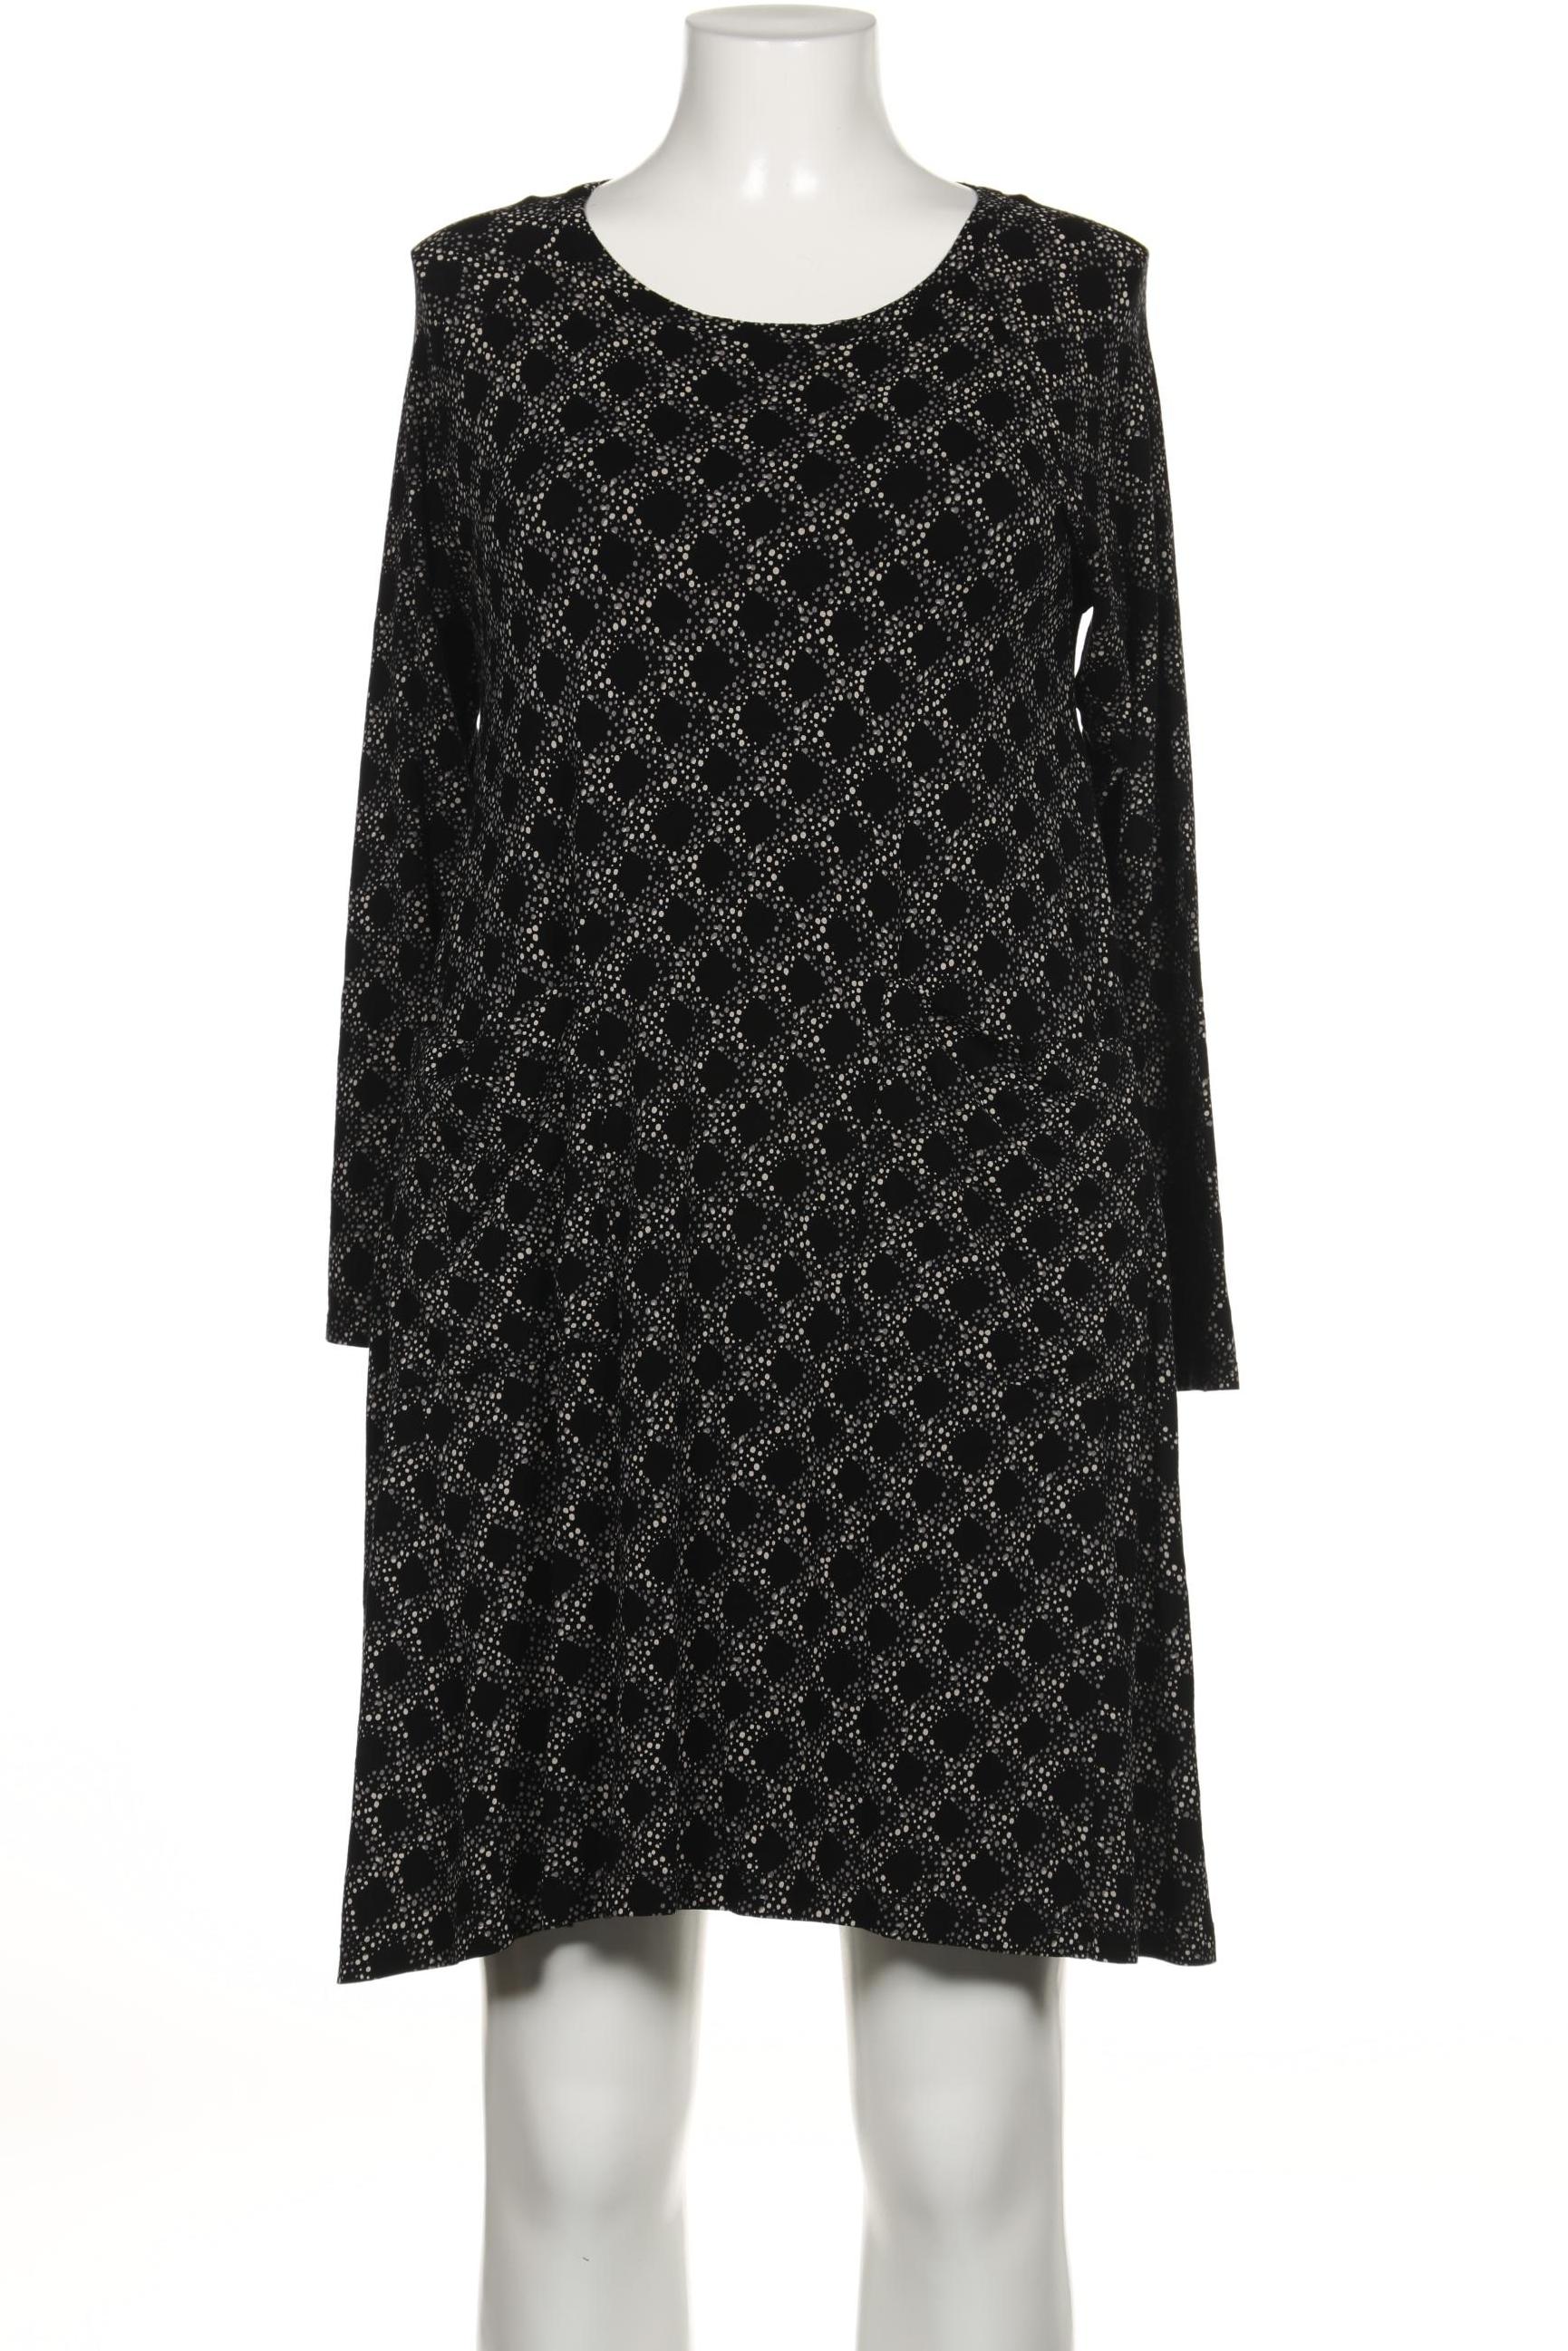 The MASAI Clothing Company Damen Kleid, schwarz von The MASAI Clothing Company